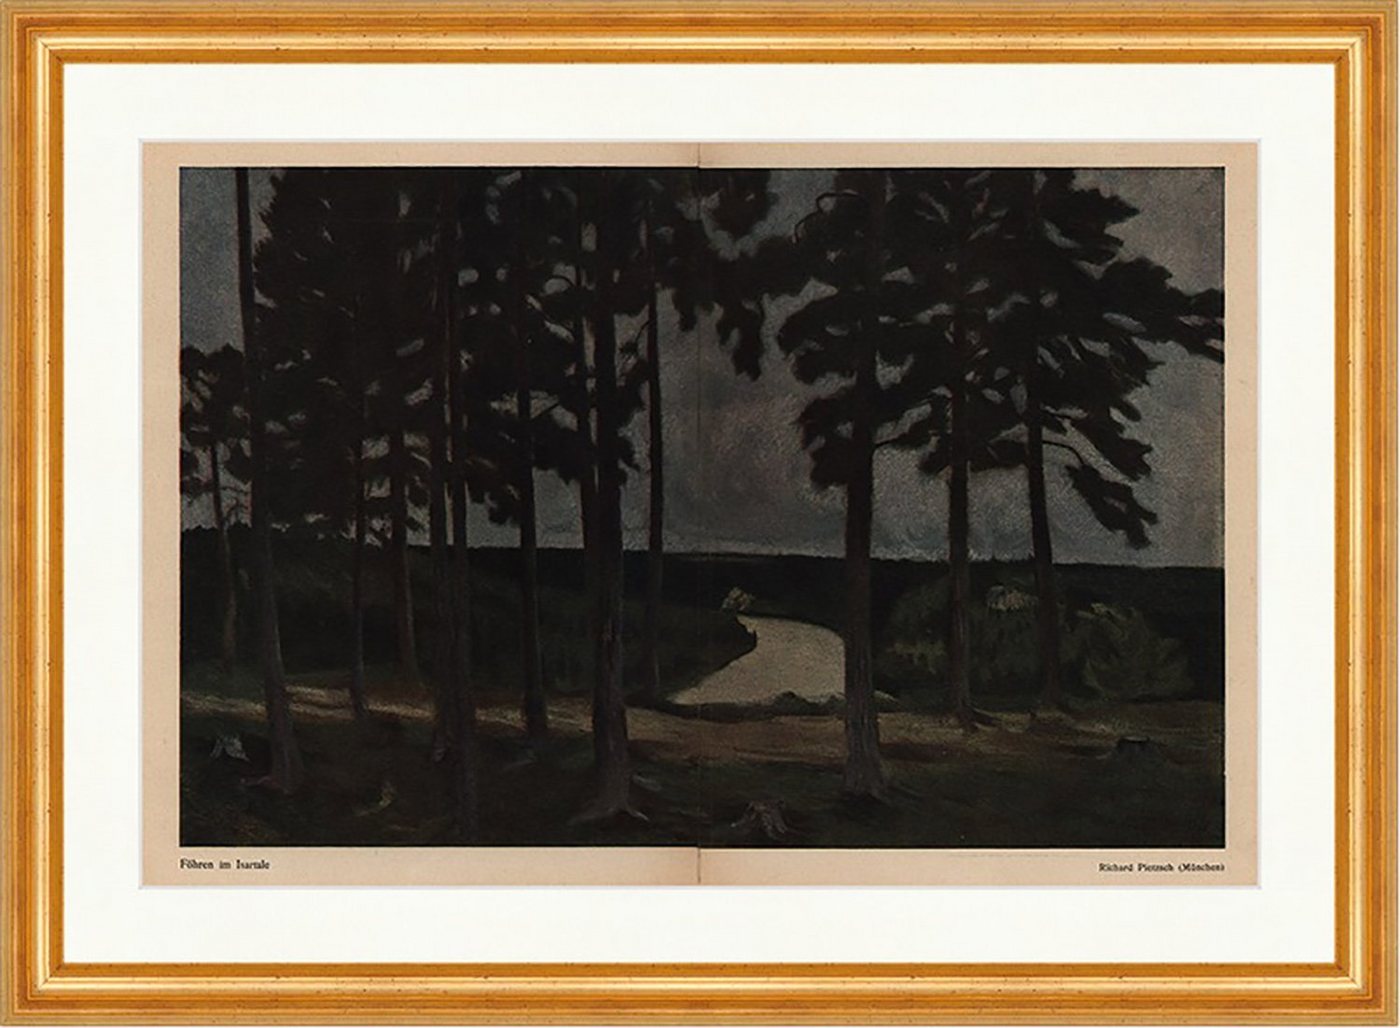 Kunstdruck Föhren im Isartale Richard Pietzsch Wald Fluss Bäume Weg Jugend 2152 G, (1 St) von OTTO